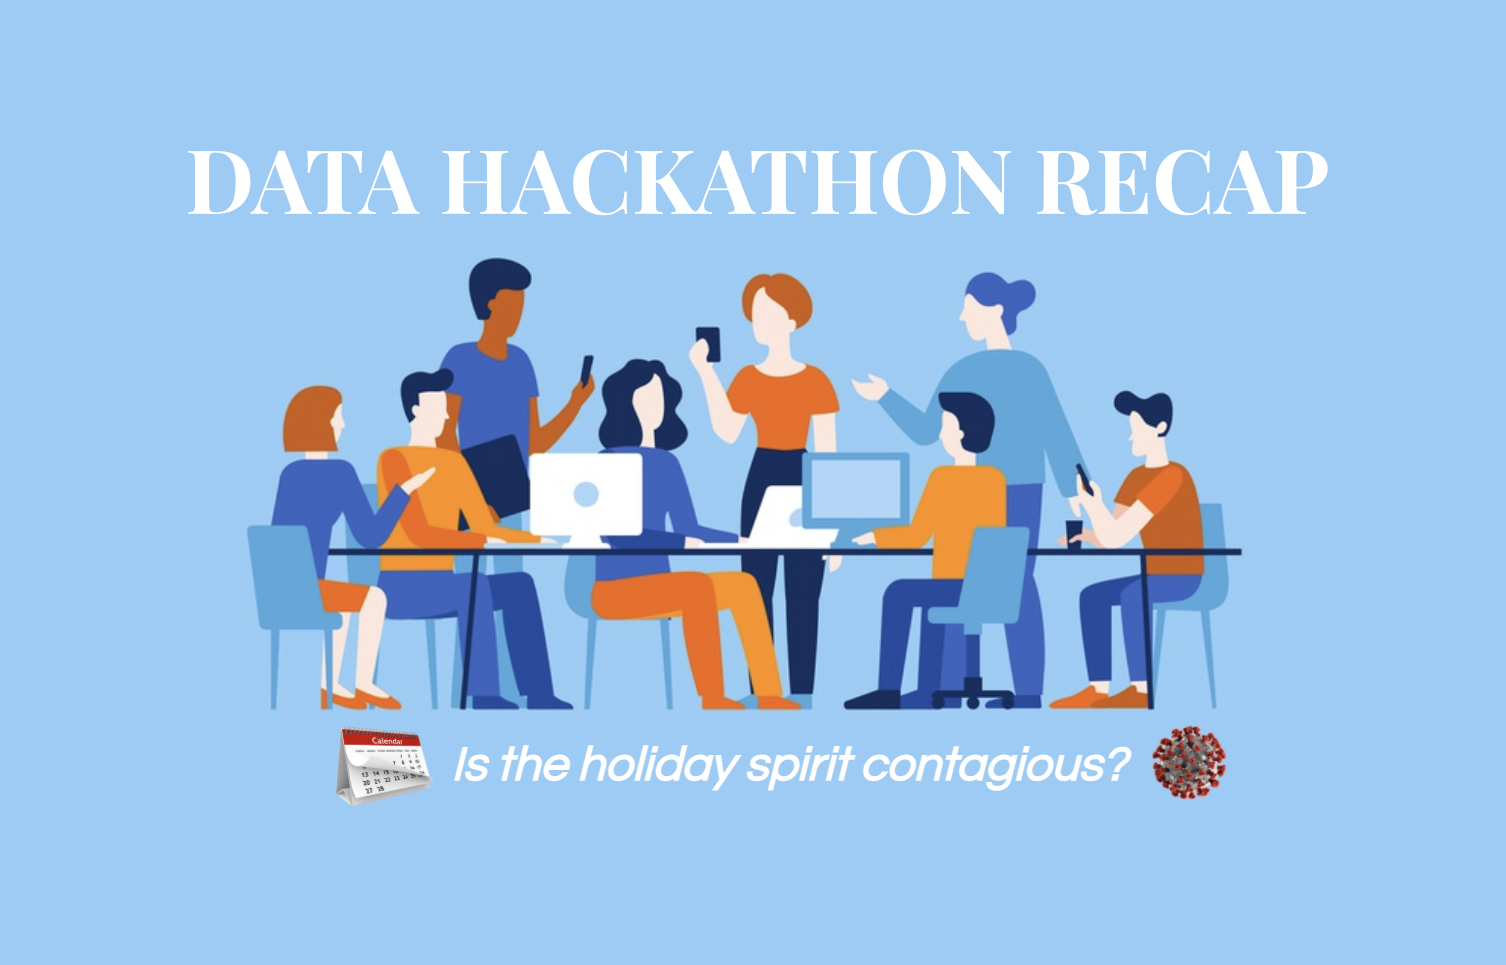 Data Hackathon Recap